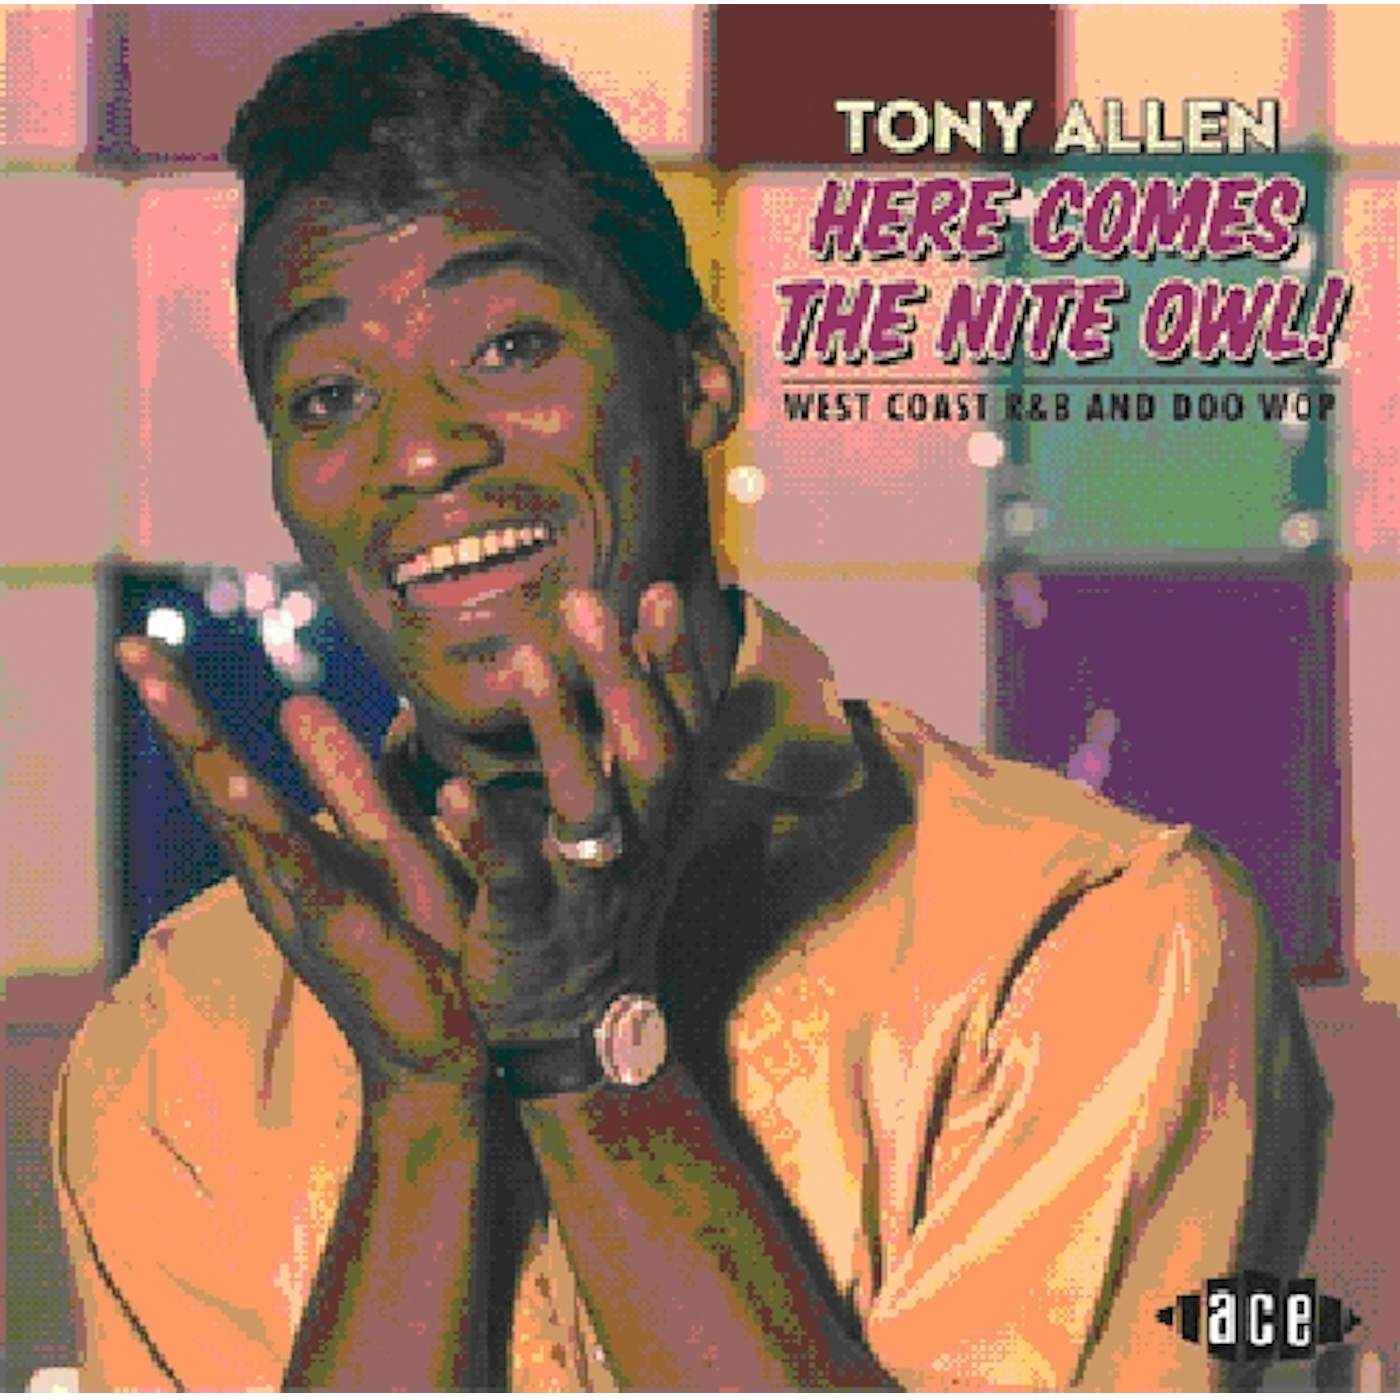 Tony Allen HERE COMES THE NITE OWL CD